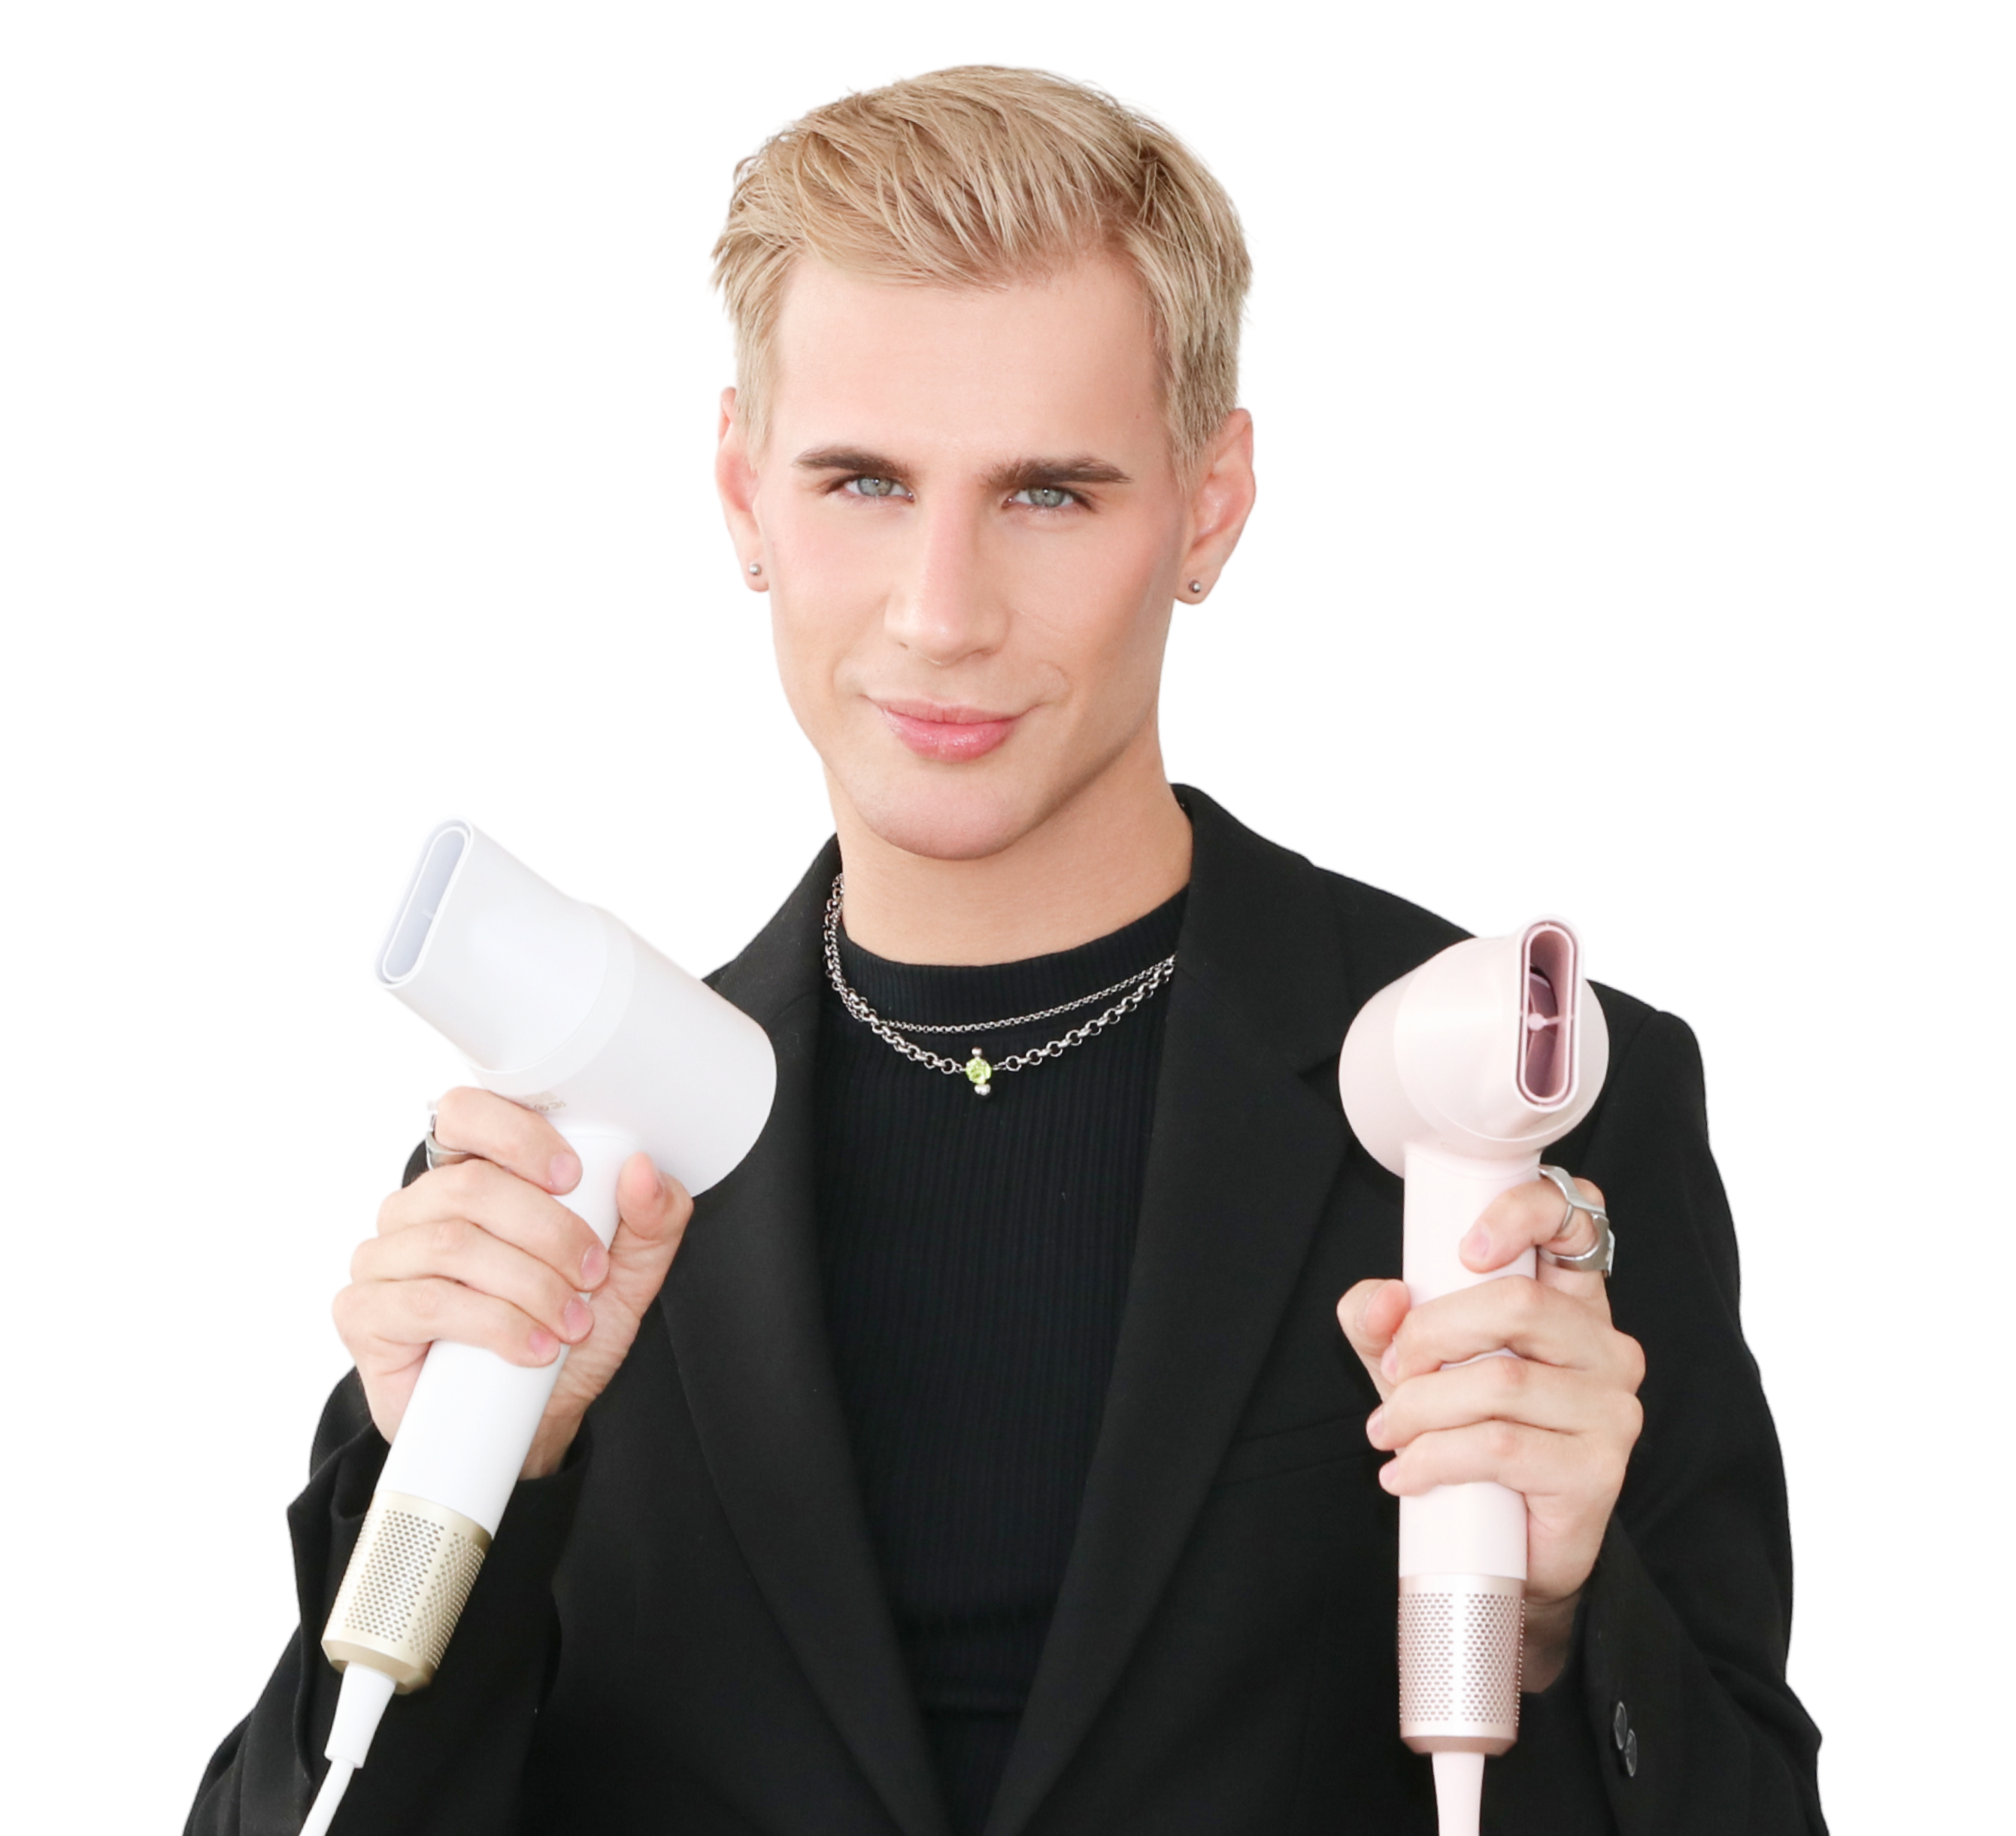 Brad Mondo hair products recommendation: Laifen hair dryer